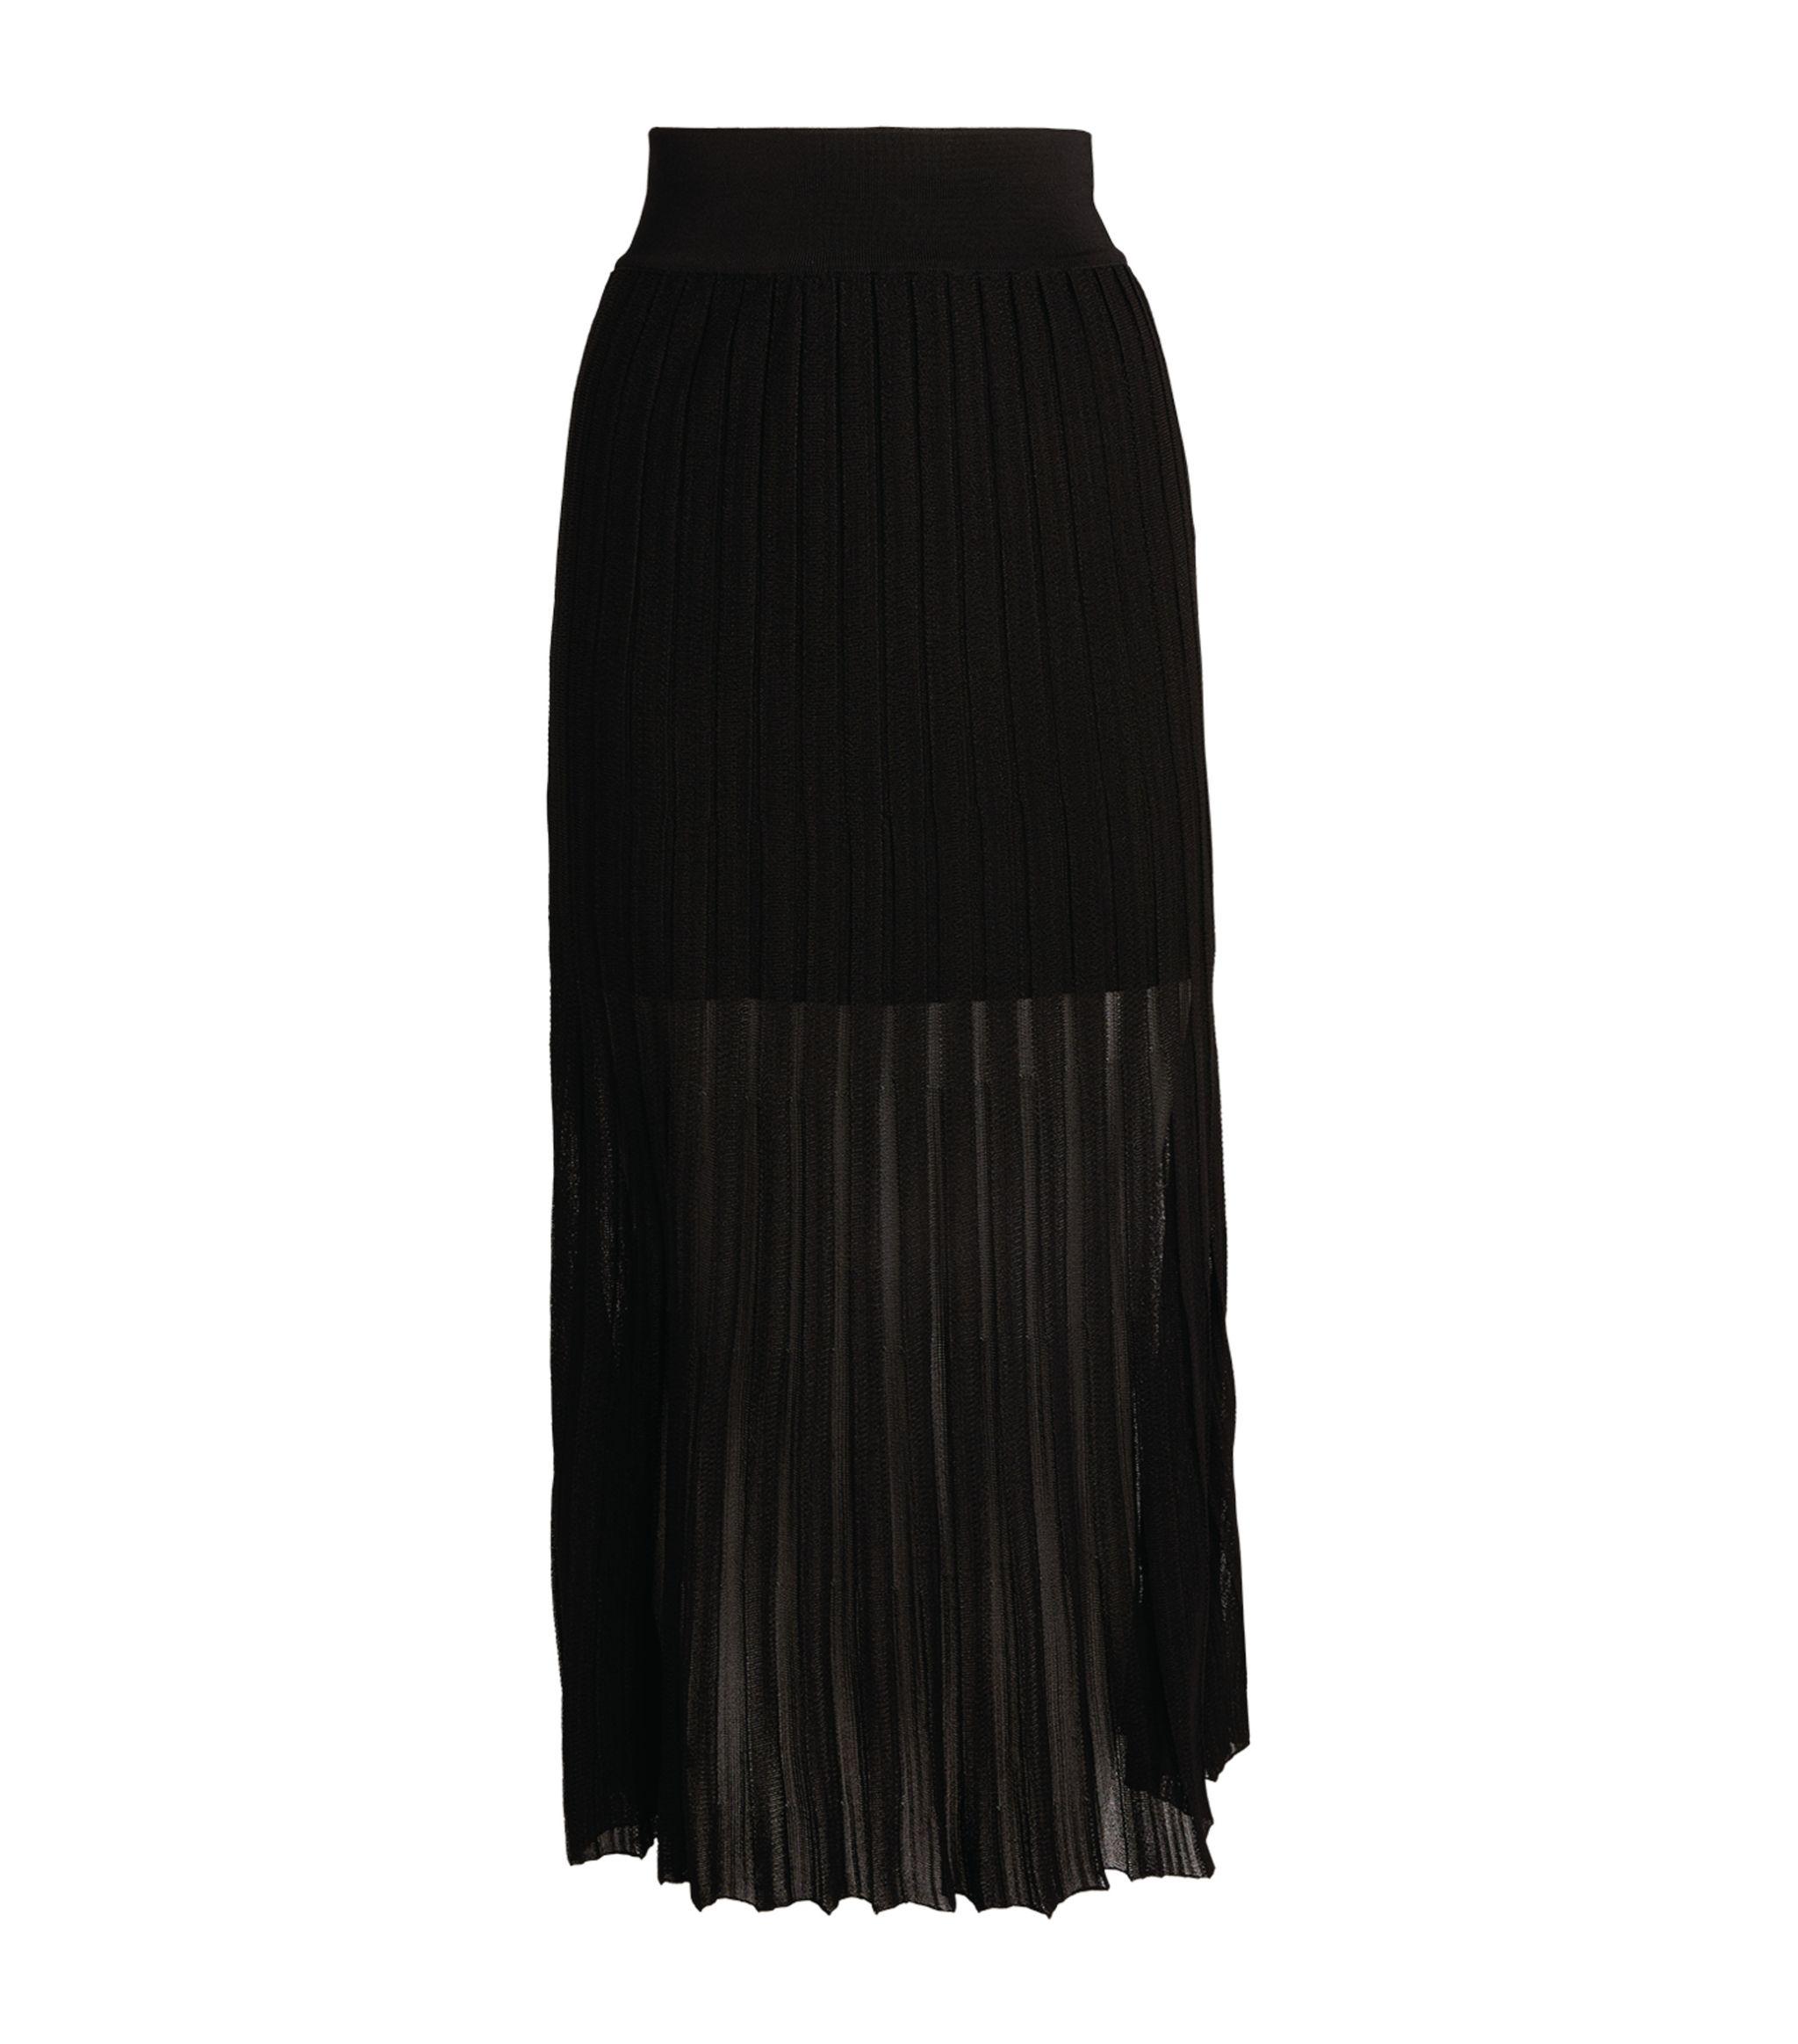 Balmain Synthetic Pleated Knit Midi Skirt in Black - Lyst